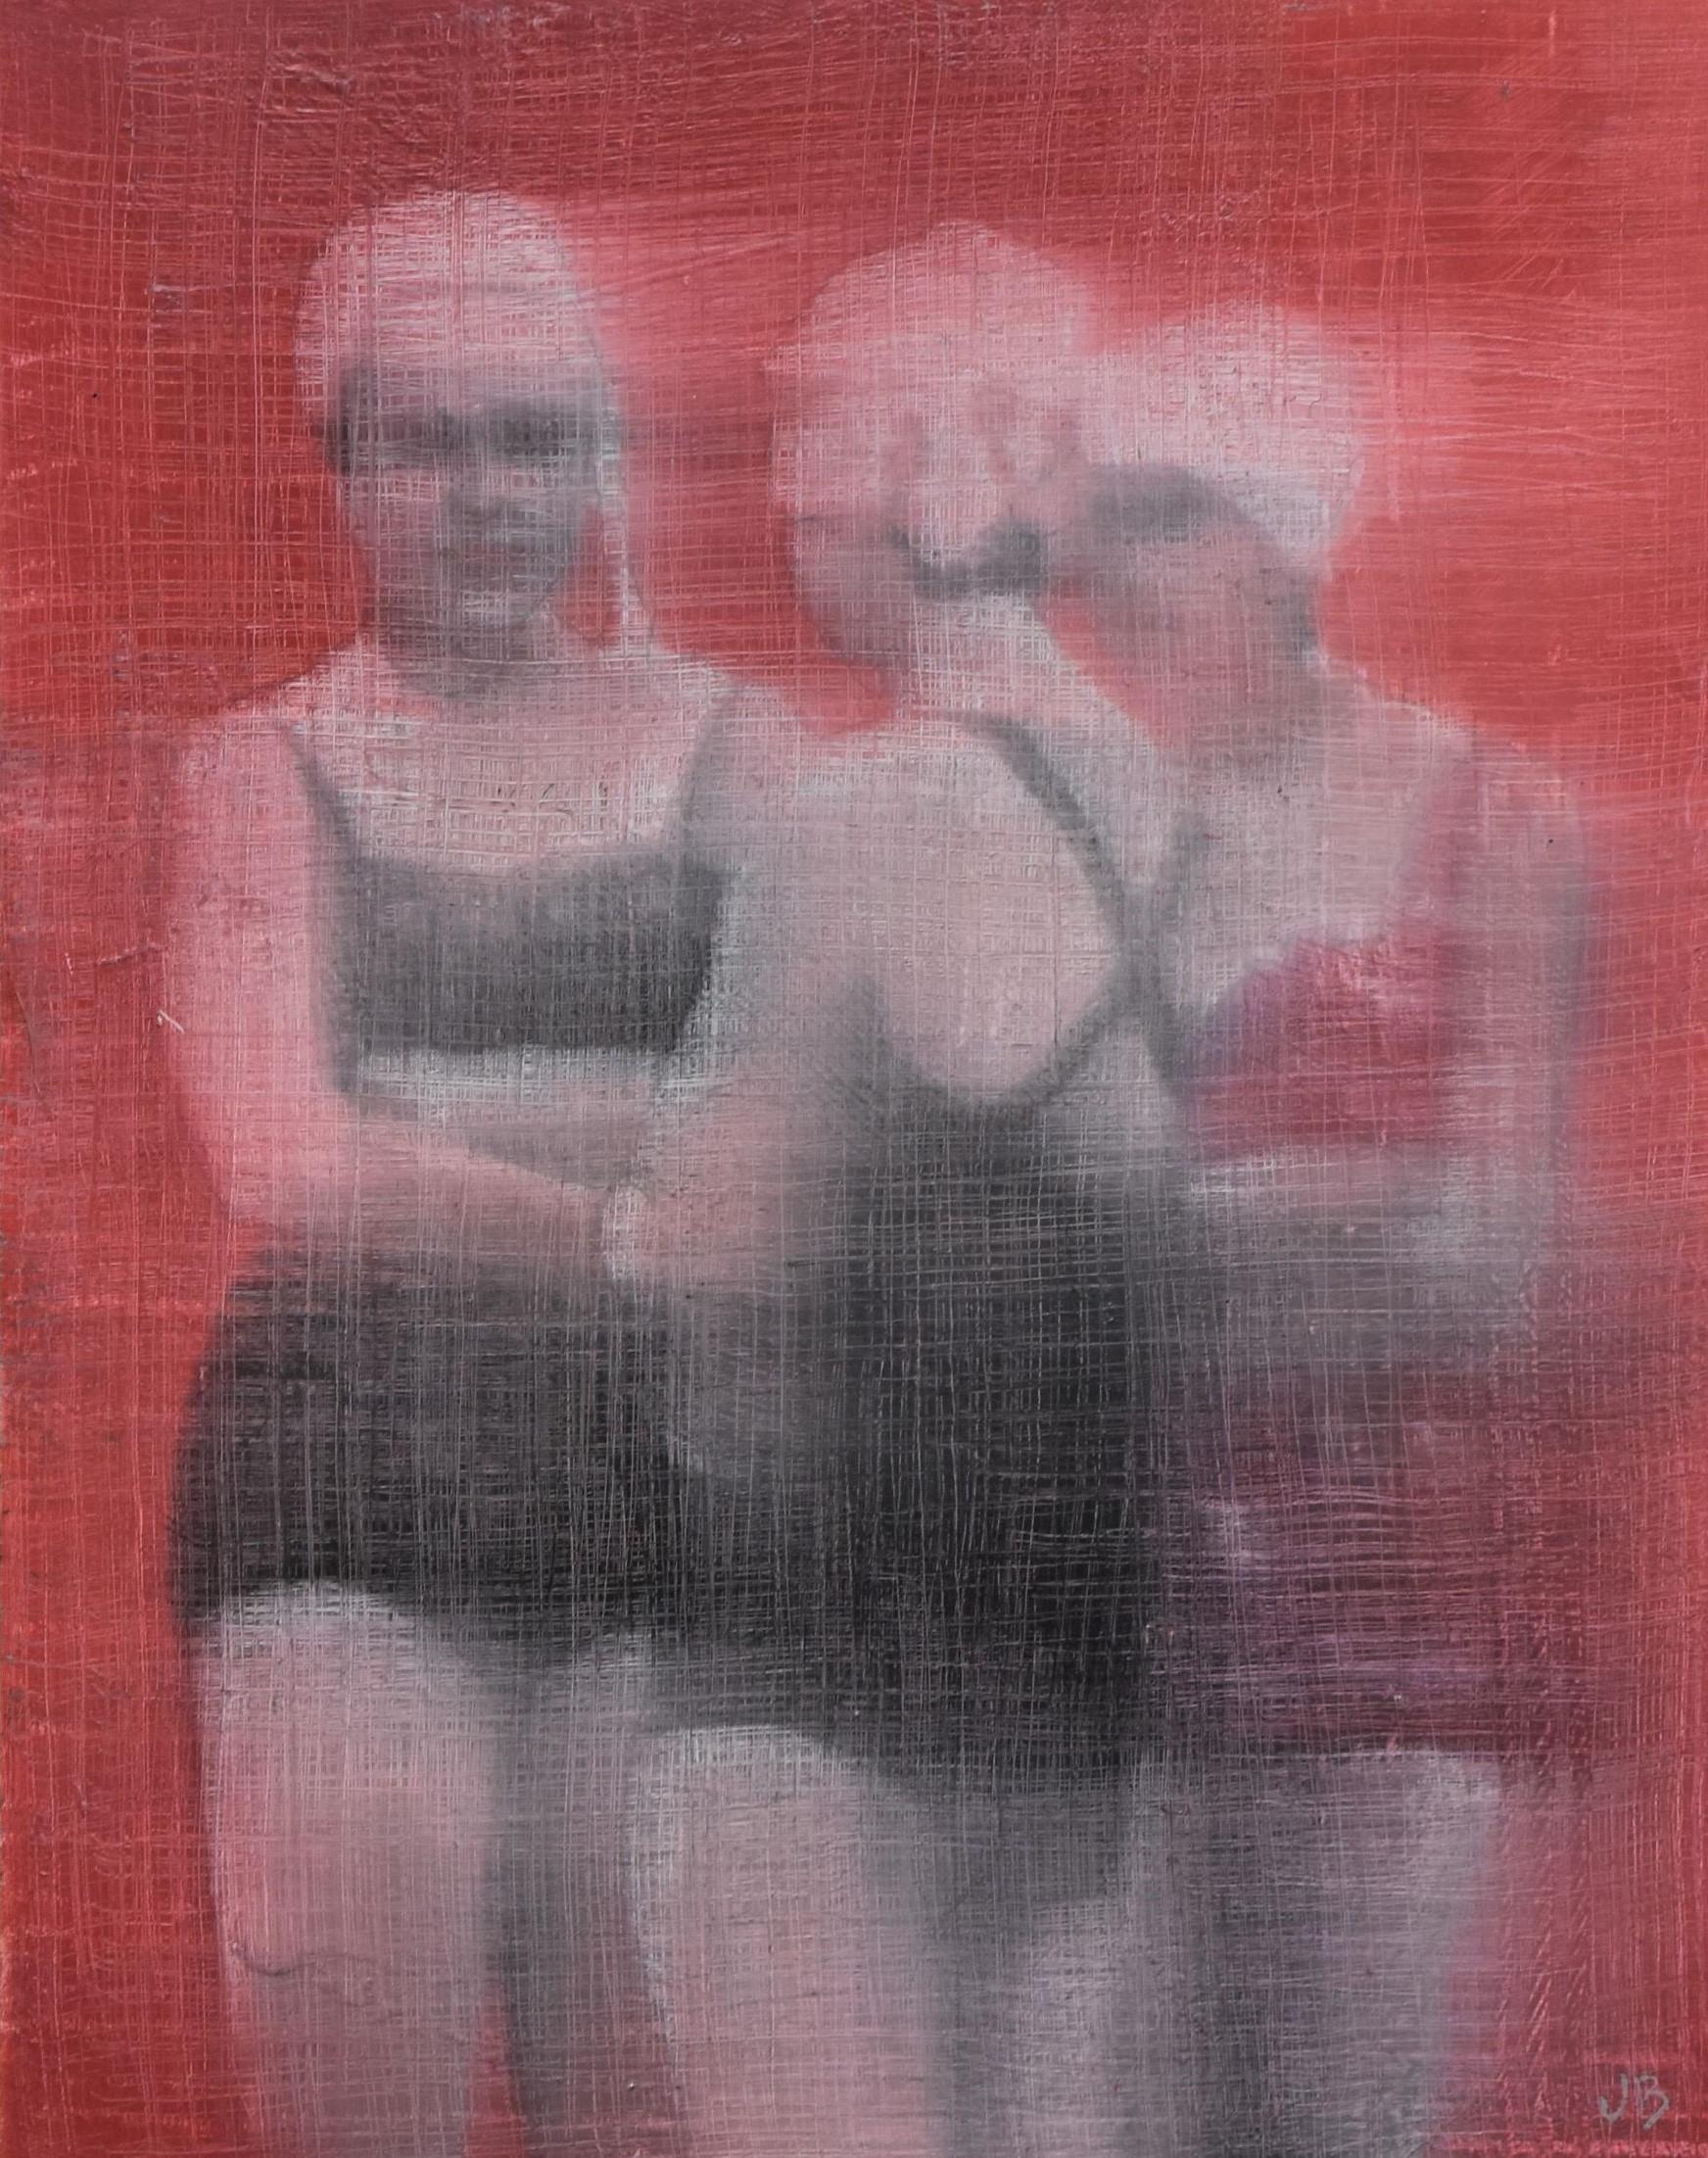 The Bathers I, Figurative, Texas artist, Women in the Arts, 9x12" oil on birch